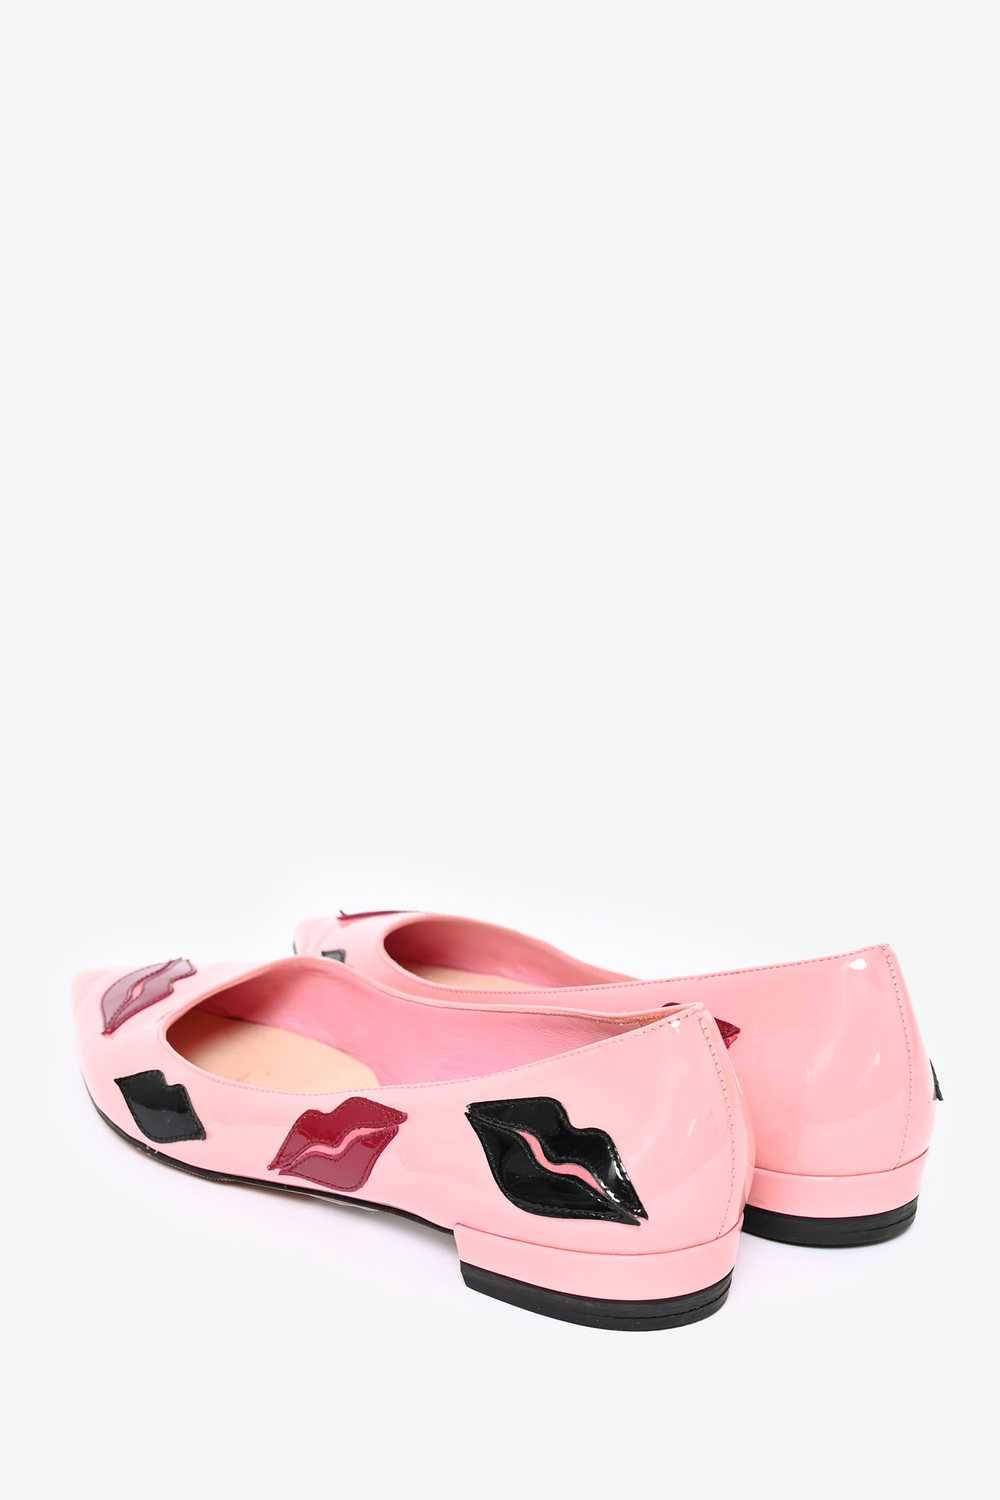 Prada Pink Patent Leather Kiss Print Flats Size 36 - image 3